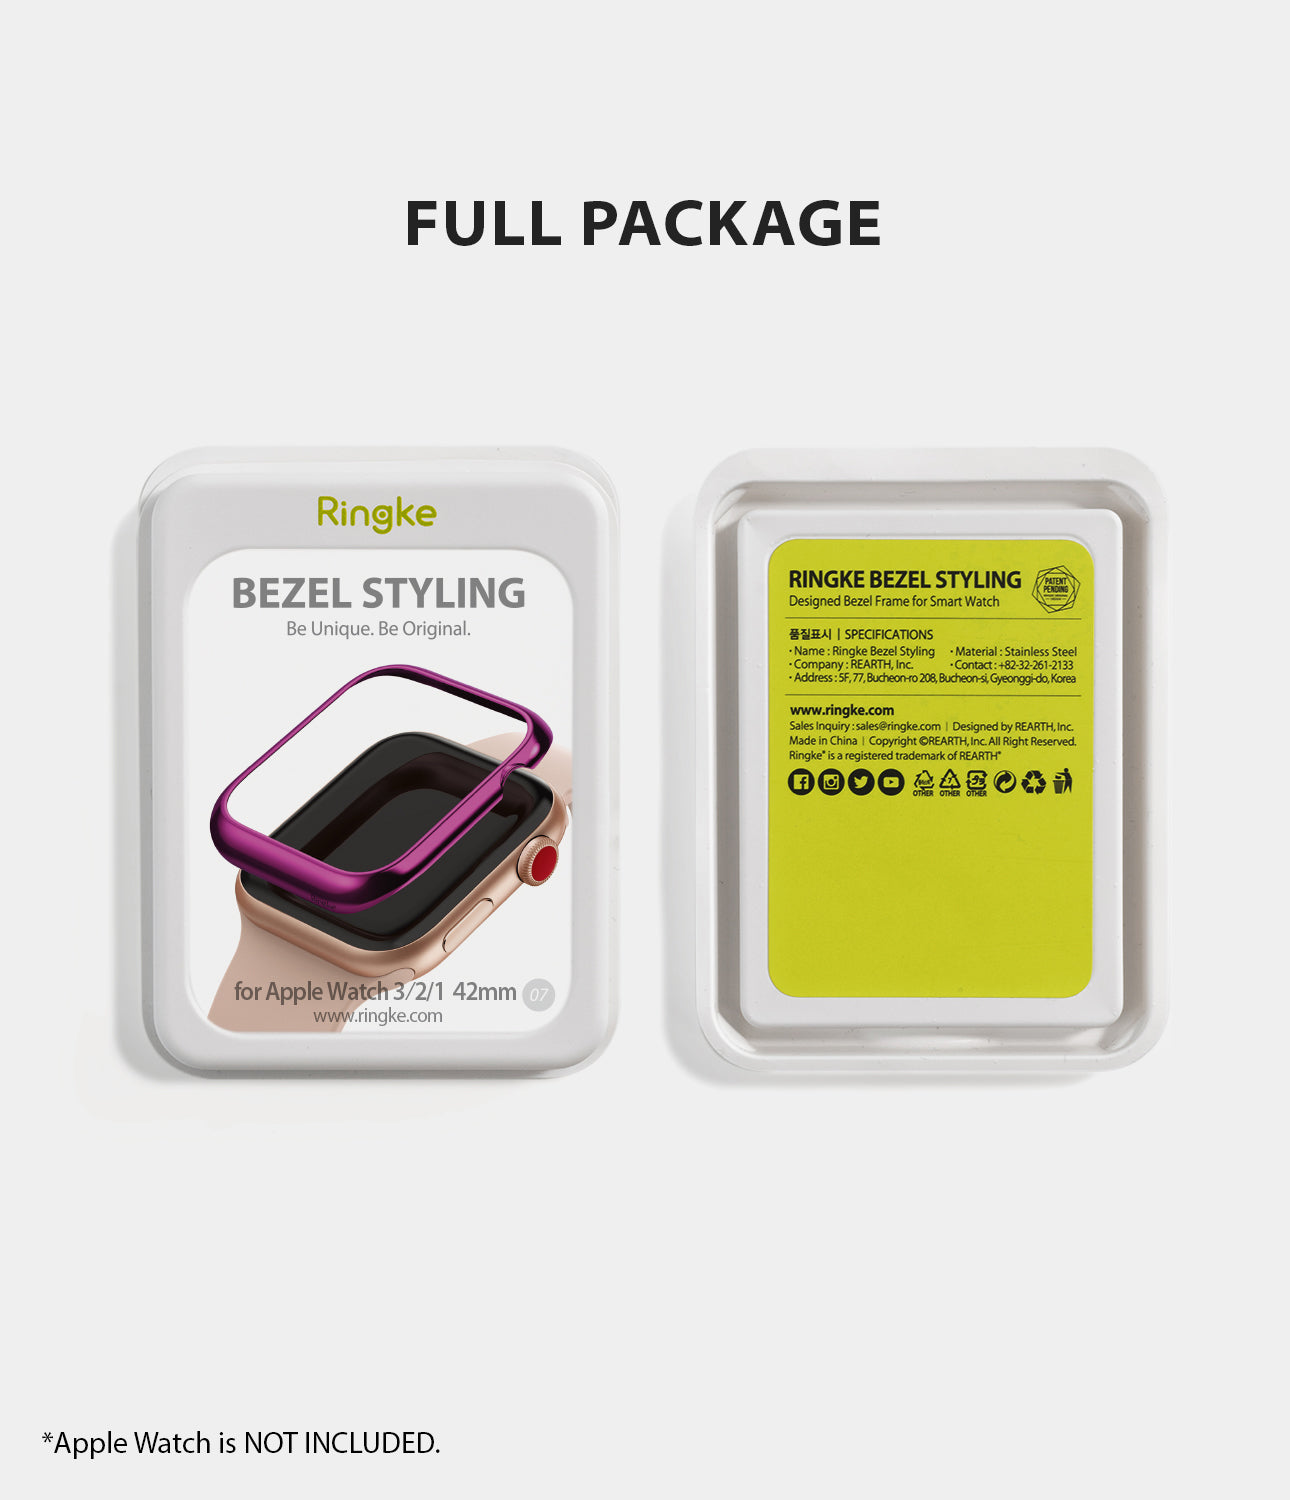 apple watch 3 2 1 42mm case ringke bezel styling stainless steel frame cover 42-07 full package